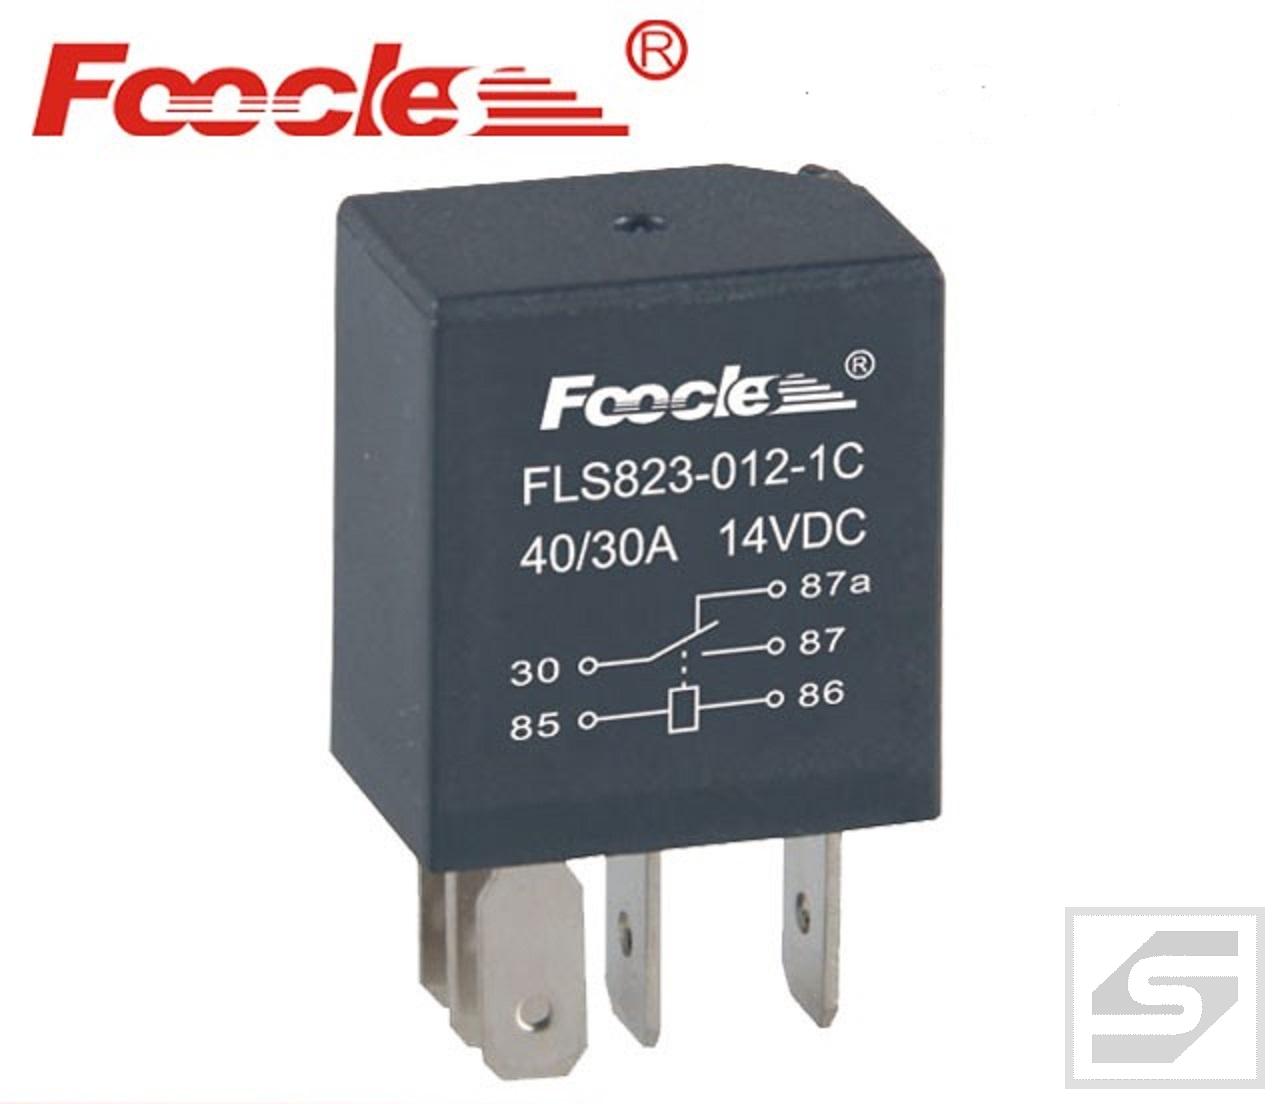 Przekaźnik FLS823-012-1C 40/30A 14VDC;5 PIN;AgSnO2;Foocle